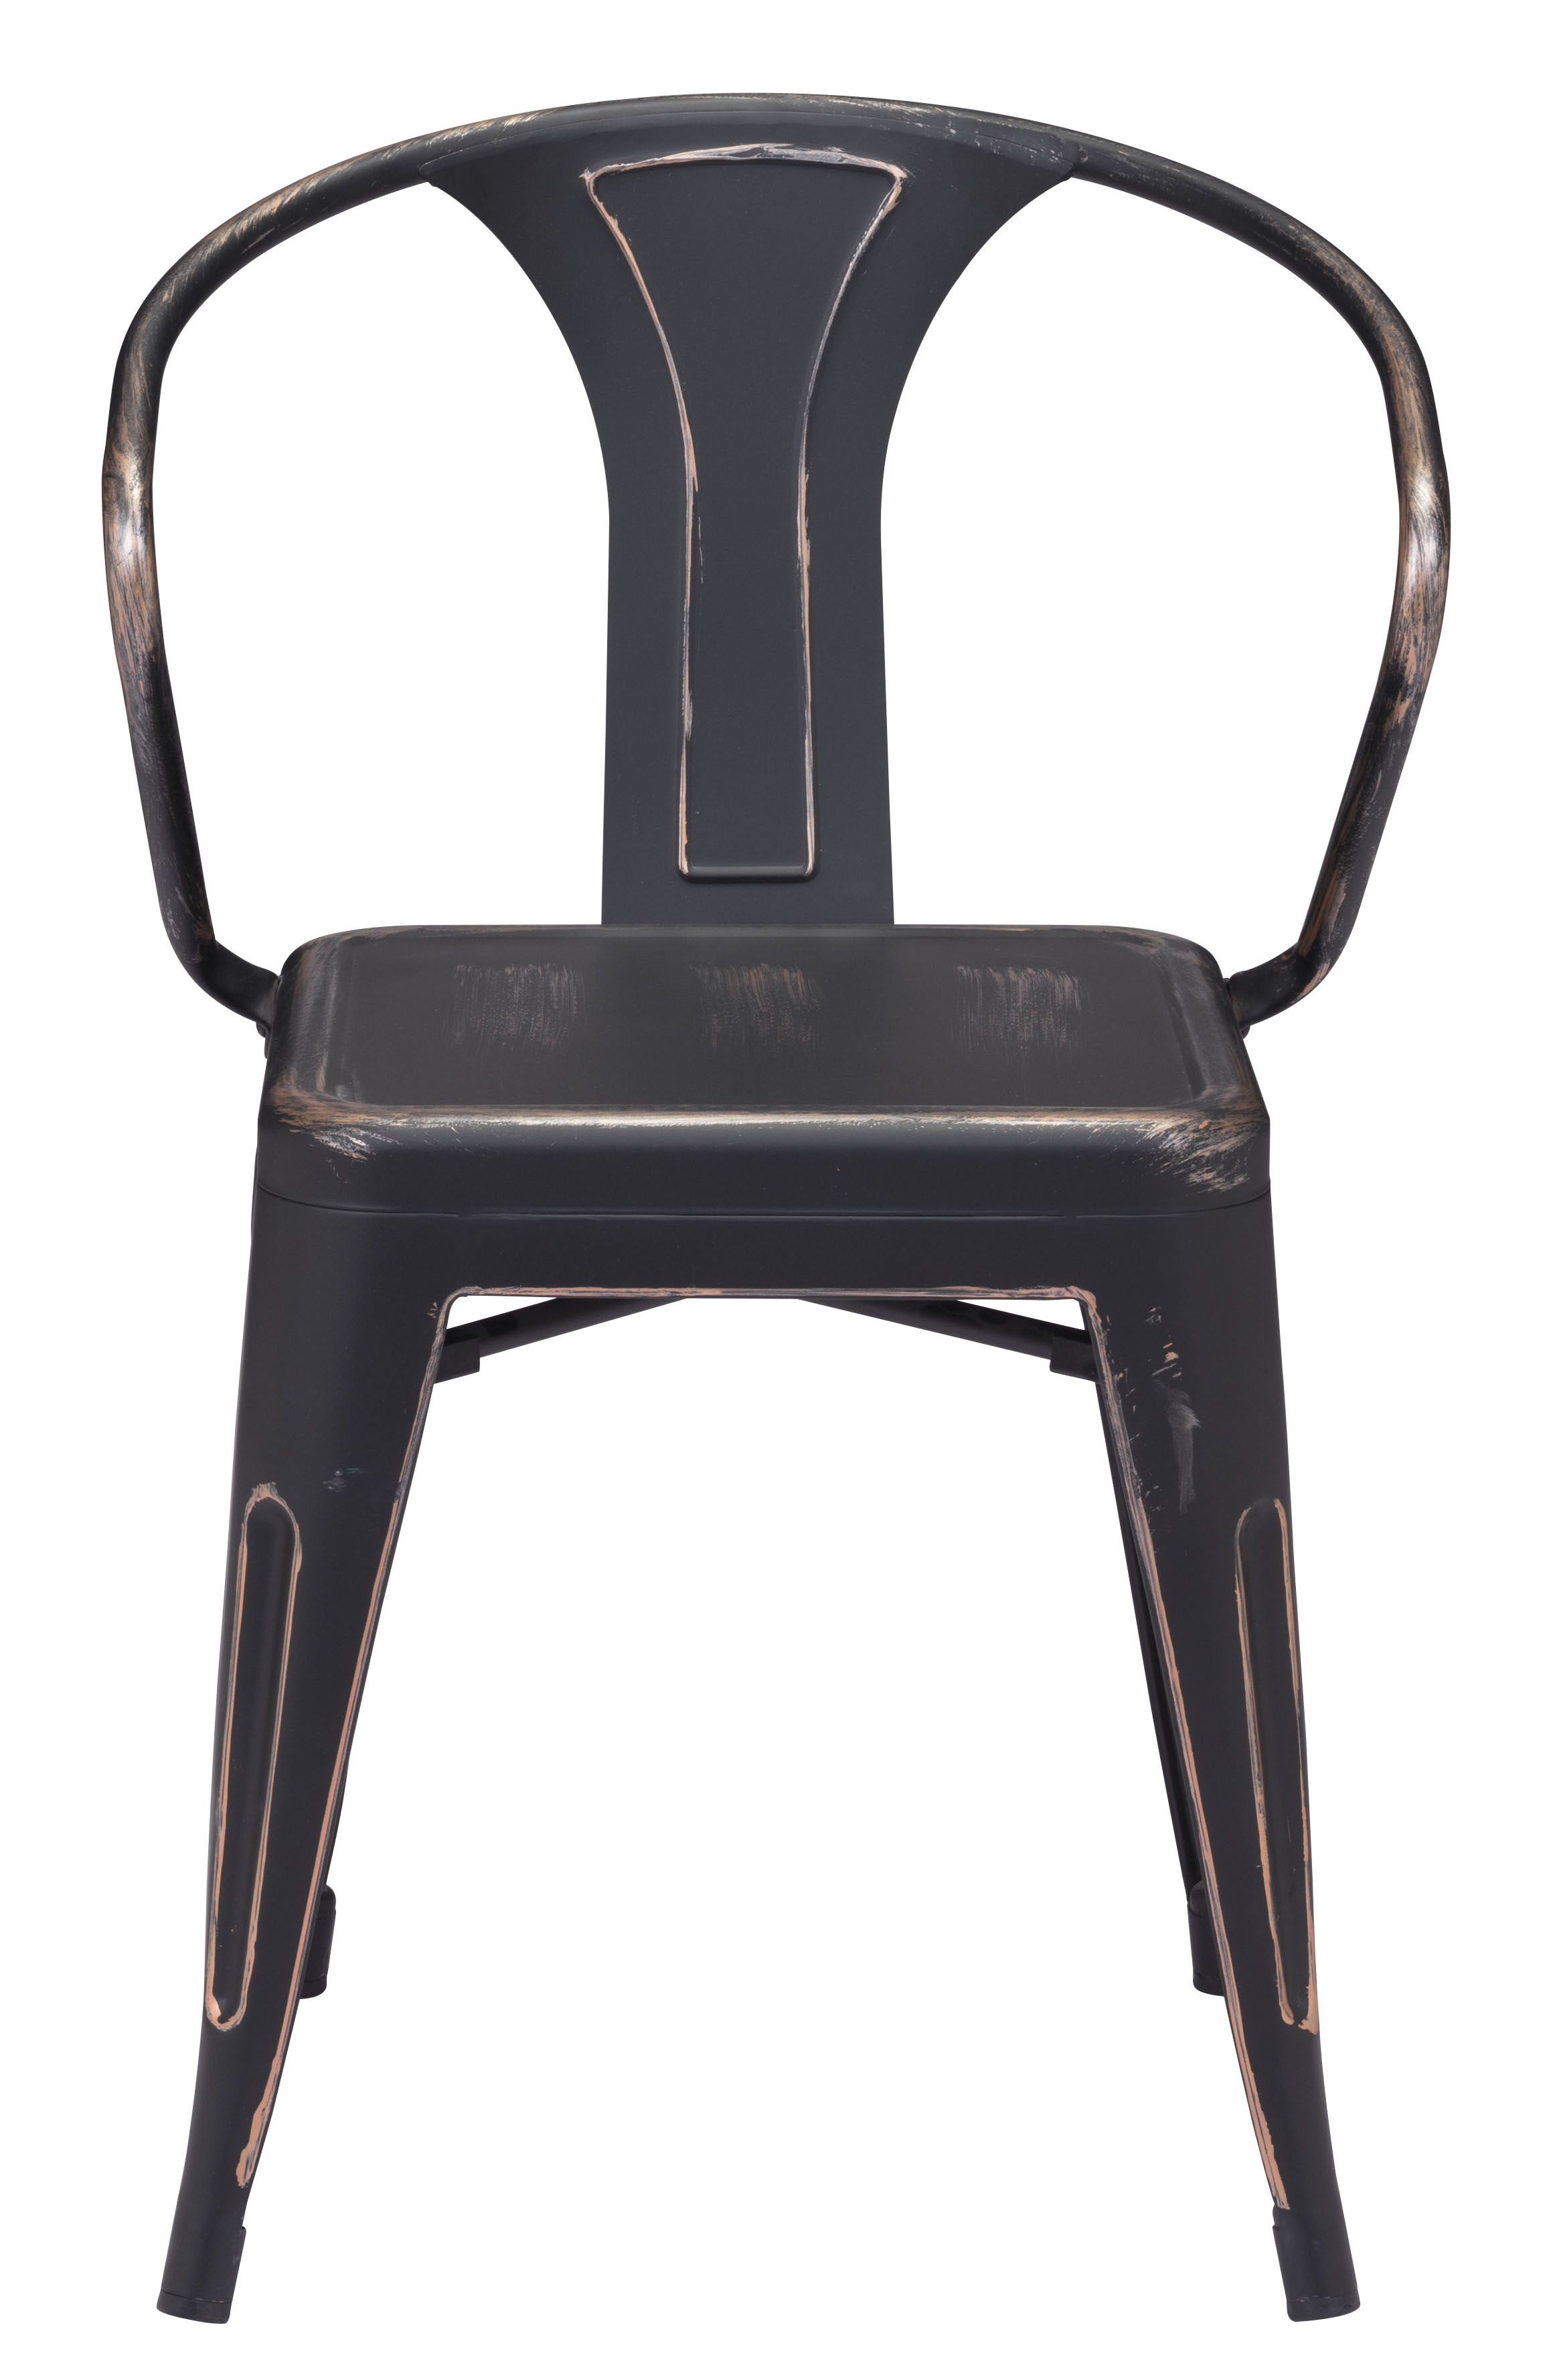 helix-chair-antique-black-gold.jpg